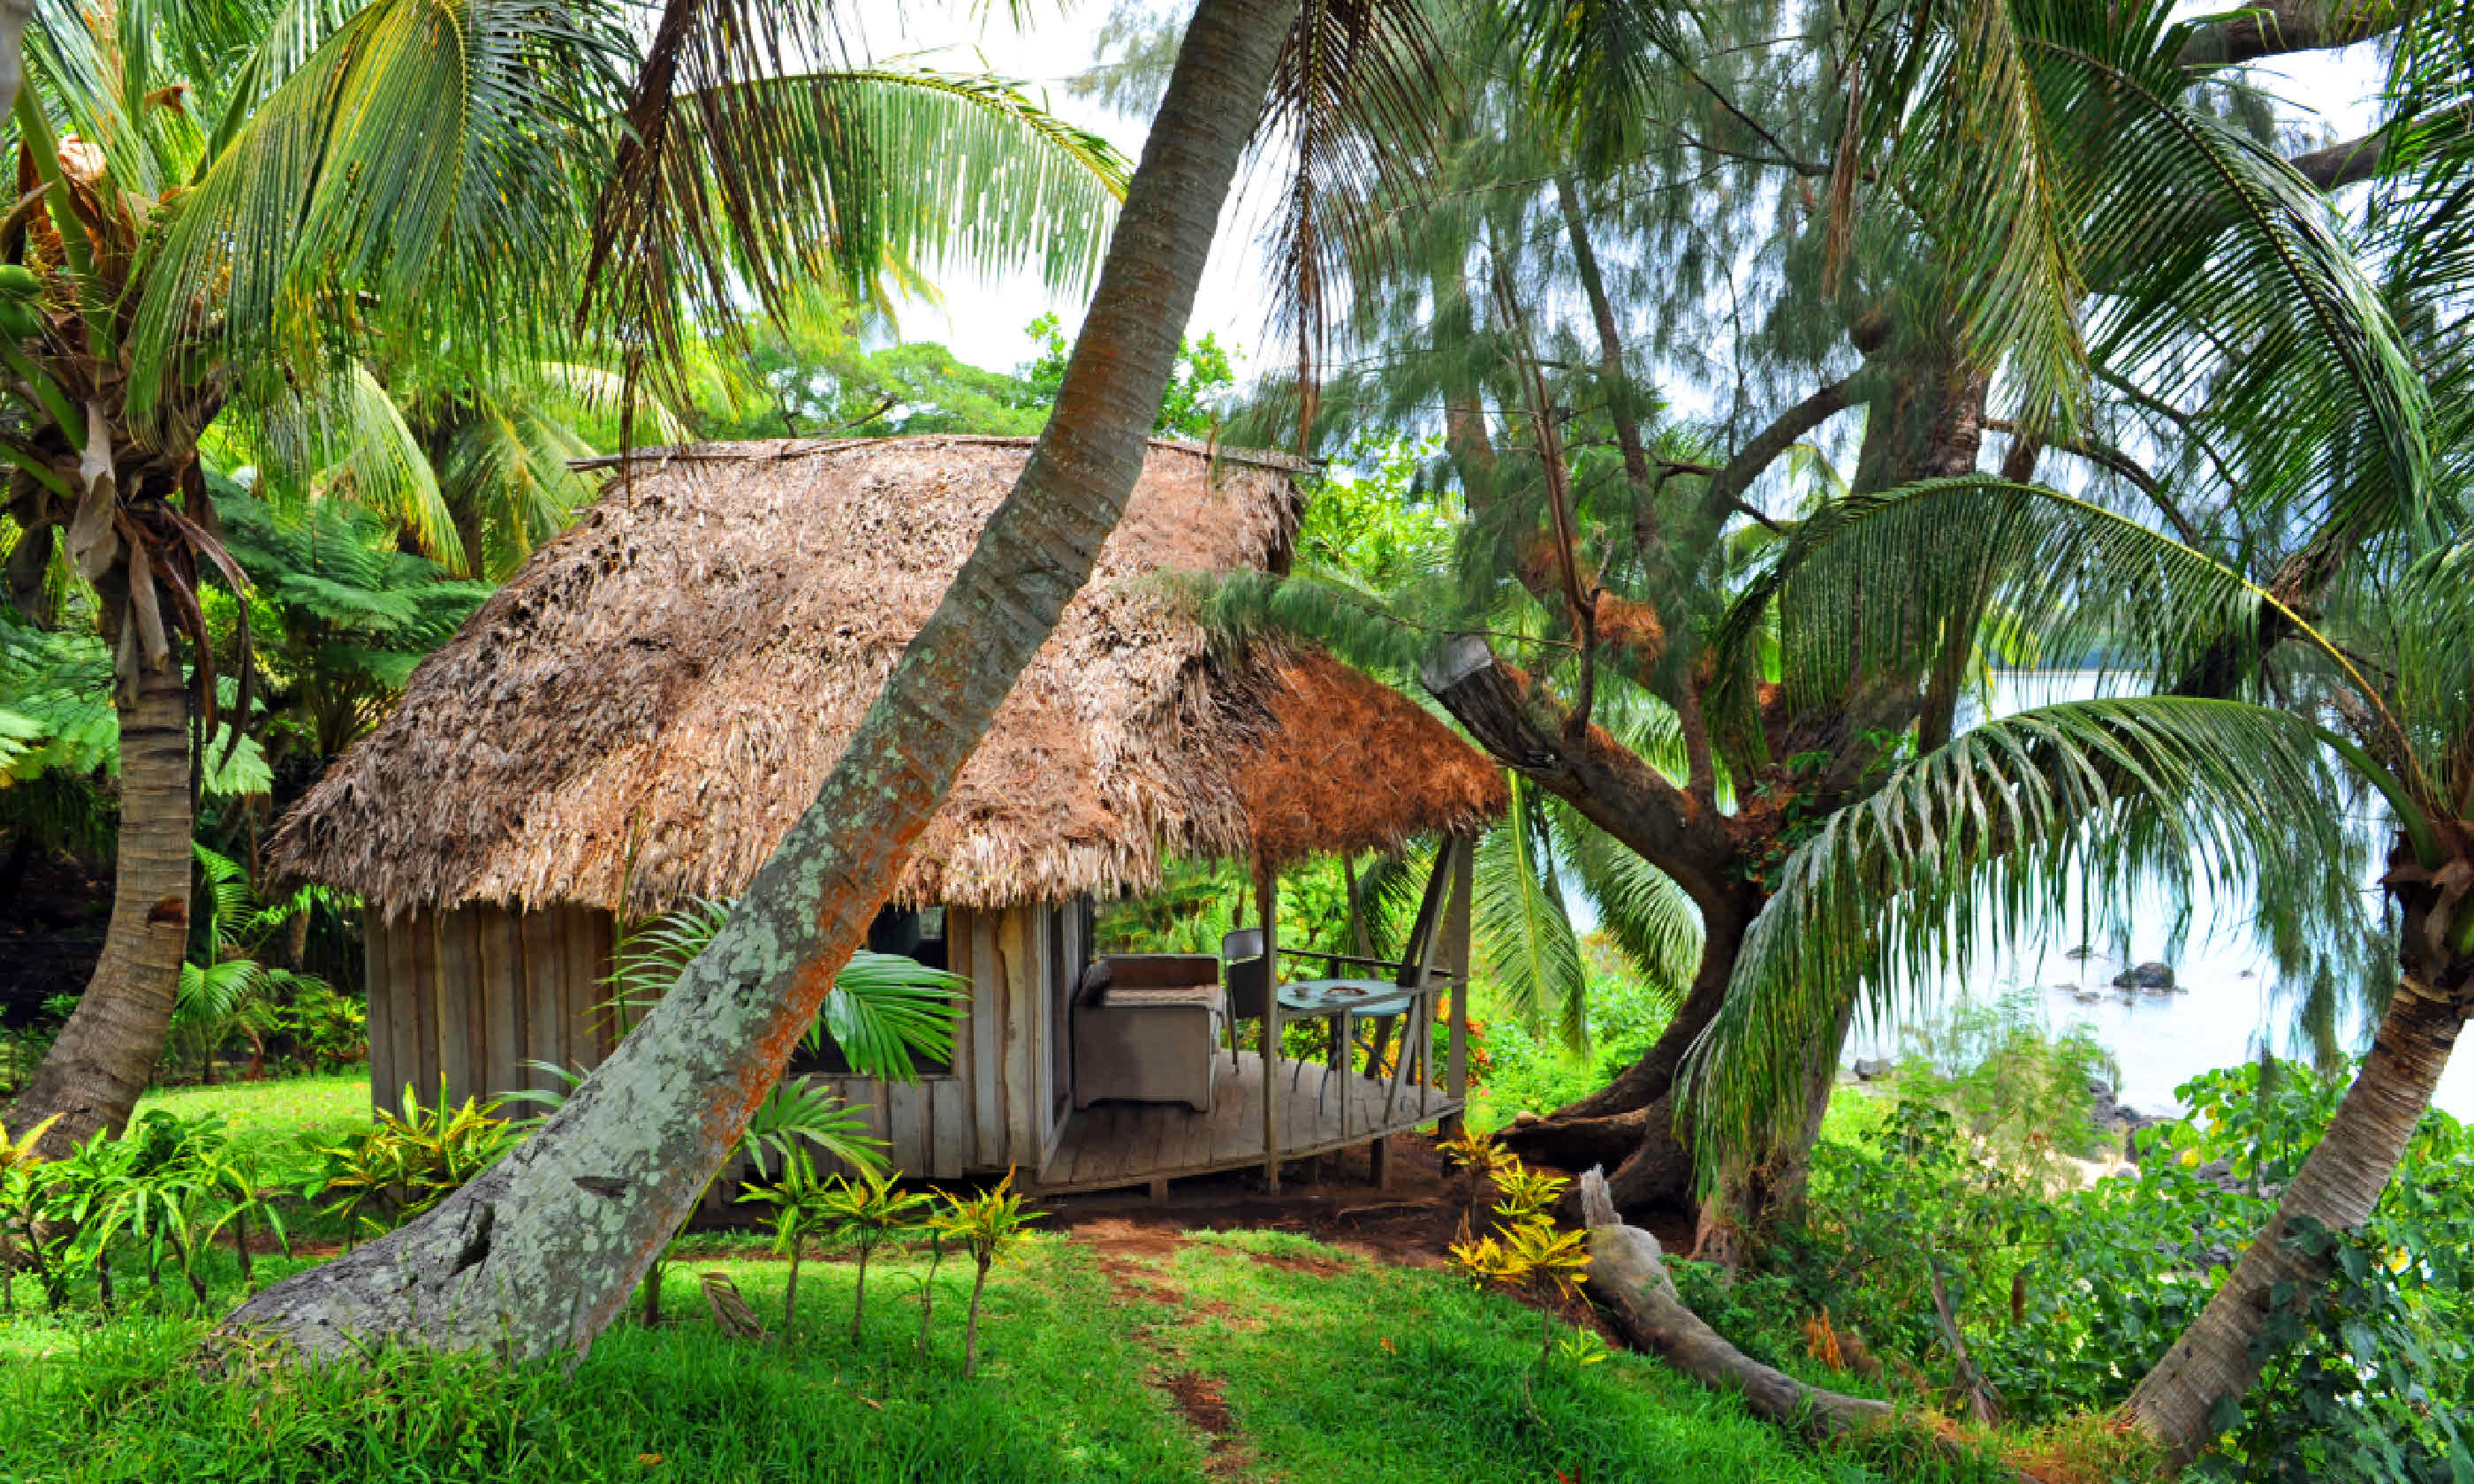 Cottage at the Bay of Port Resolution, Tanna, Vanuatu (Shutterstock)